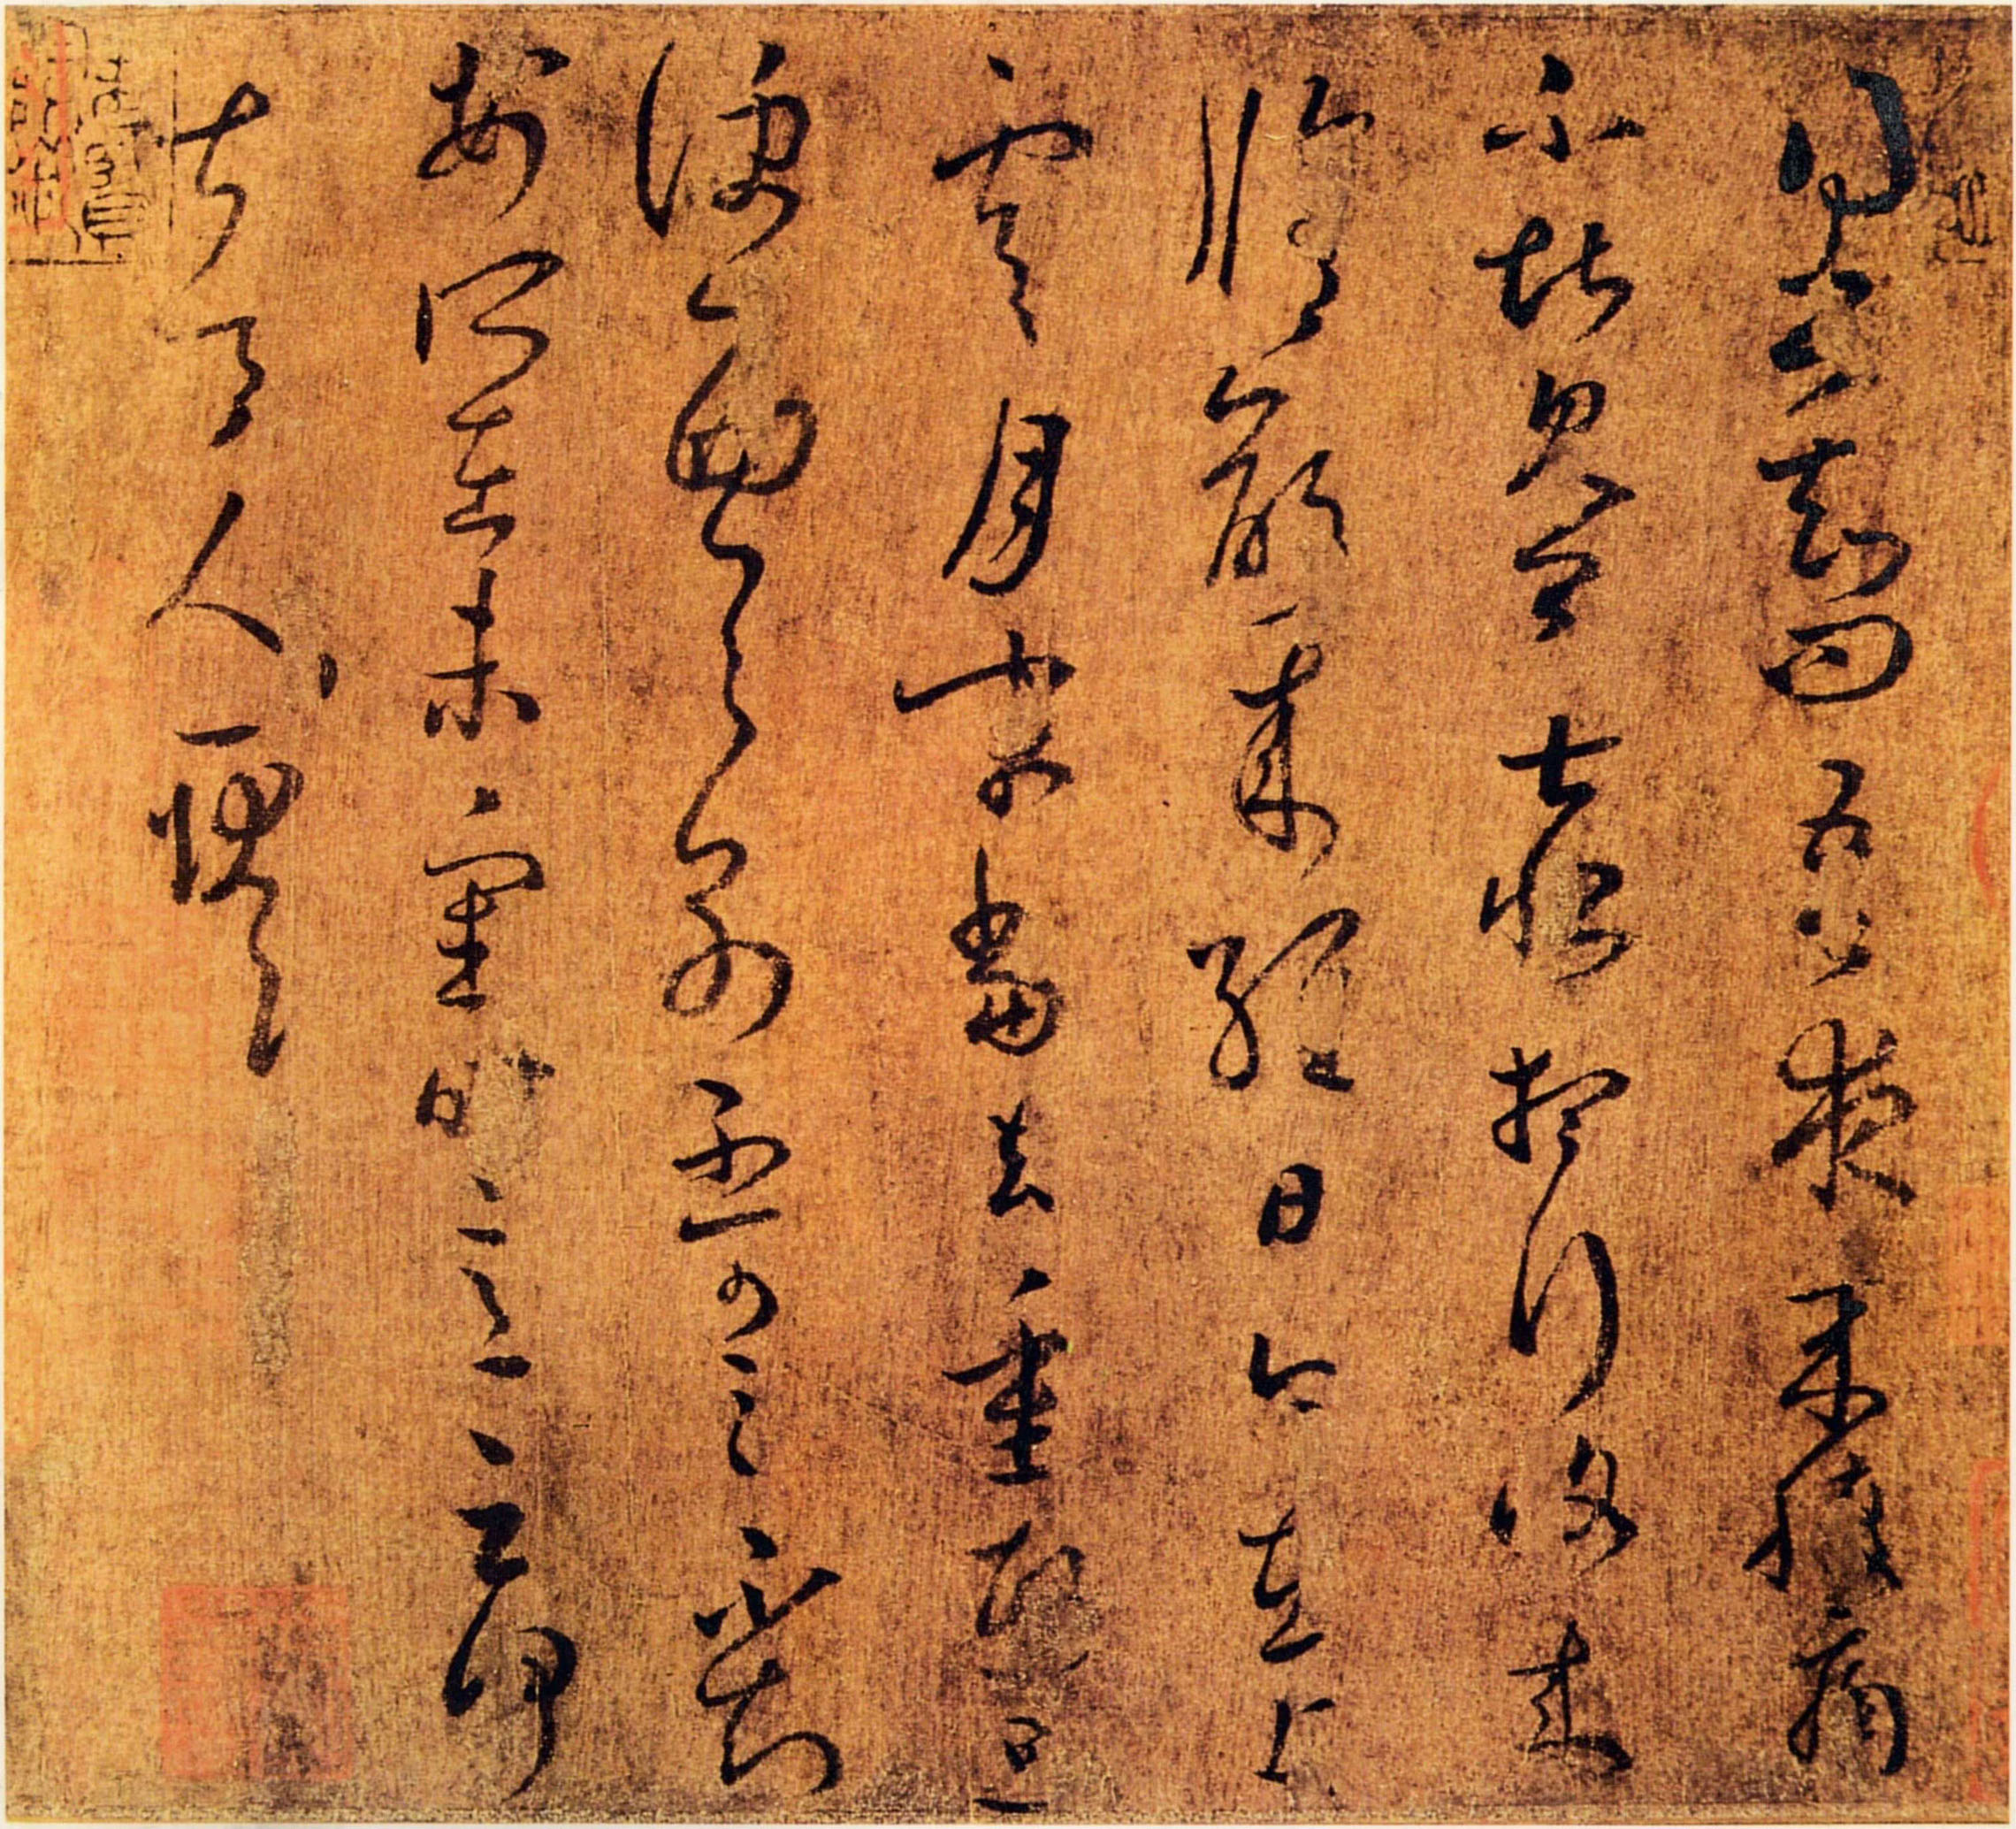 Chinese Writing, Chinese Calligraphy